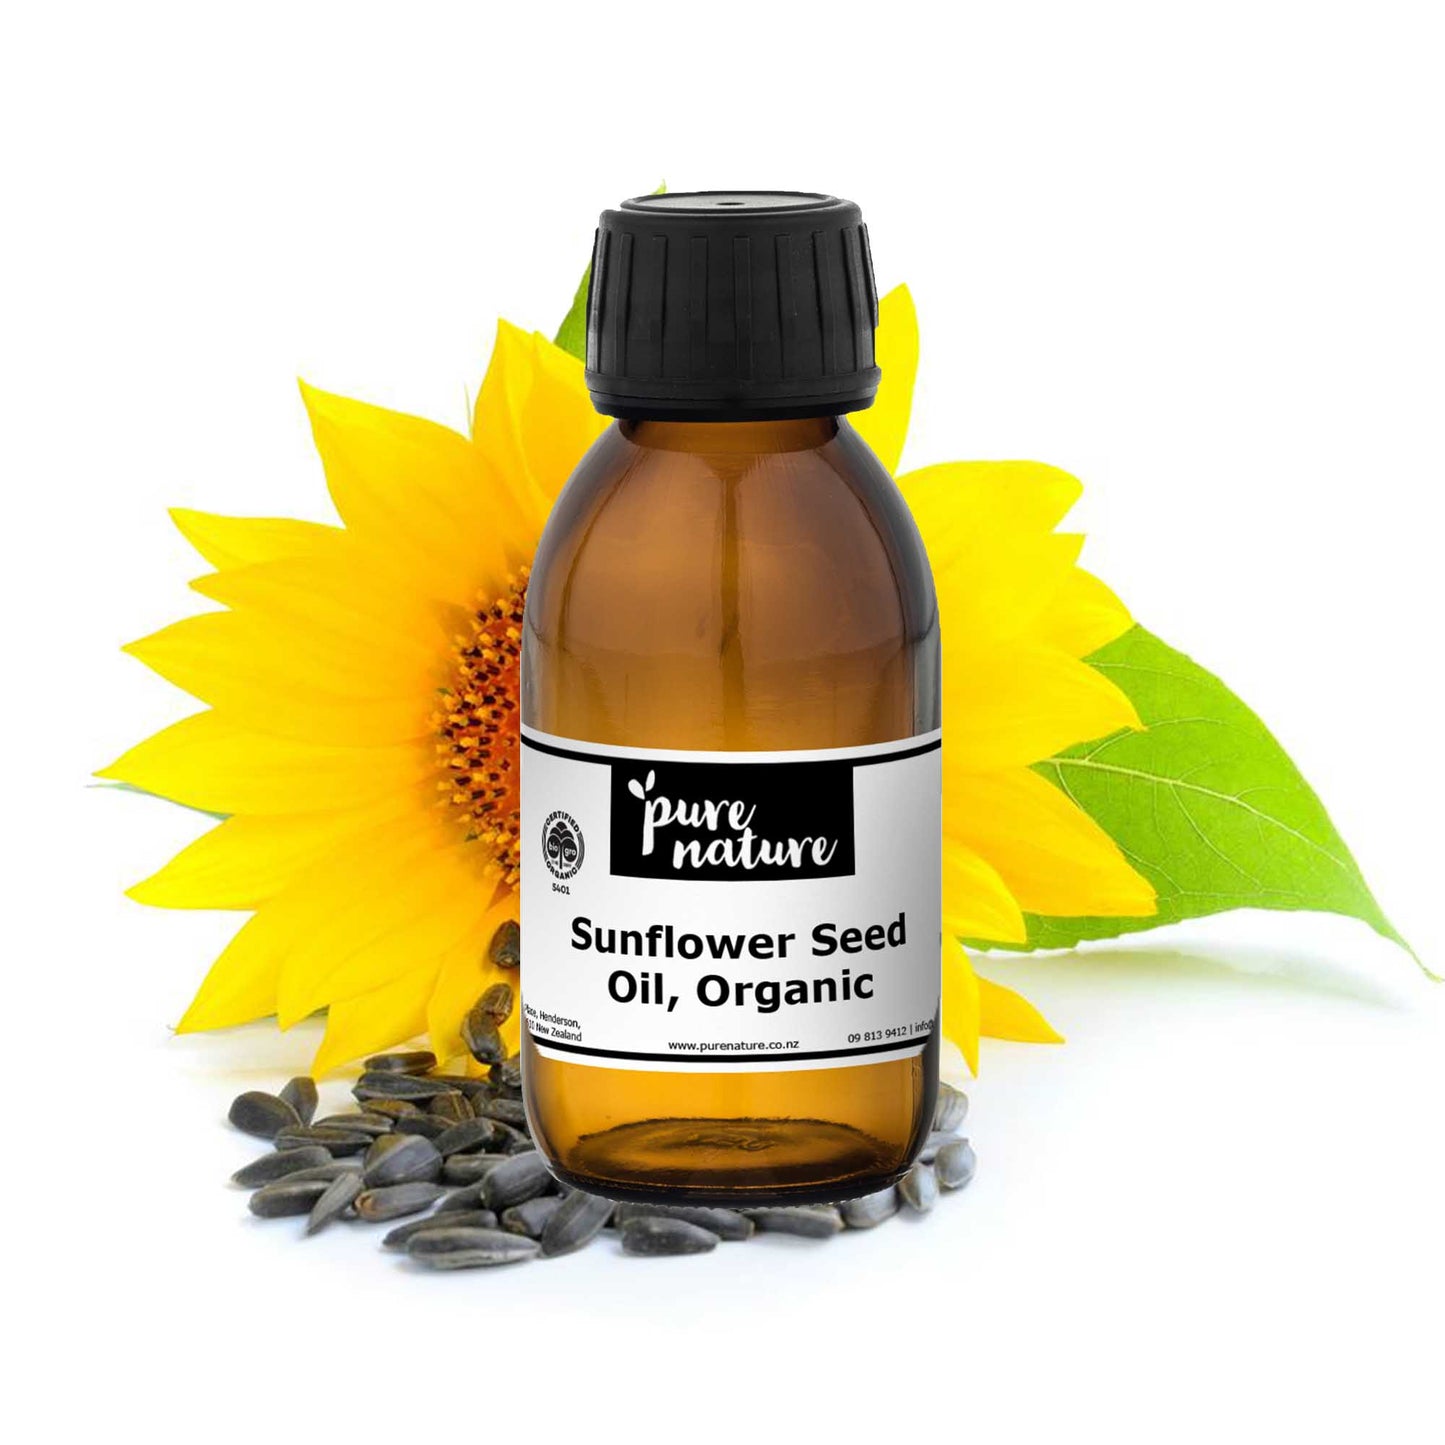 Sunflower Oil, Organic